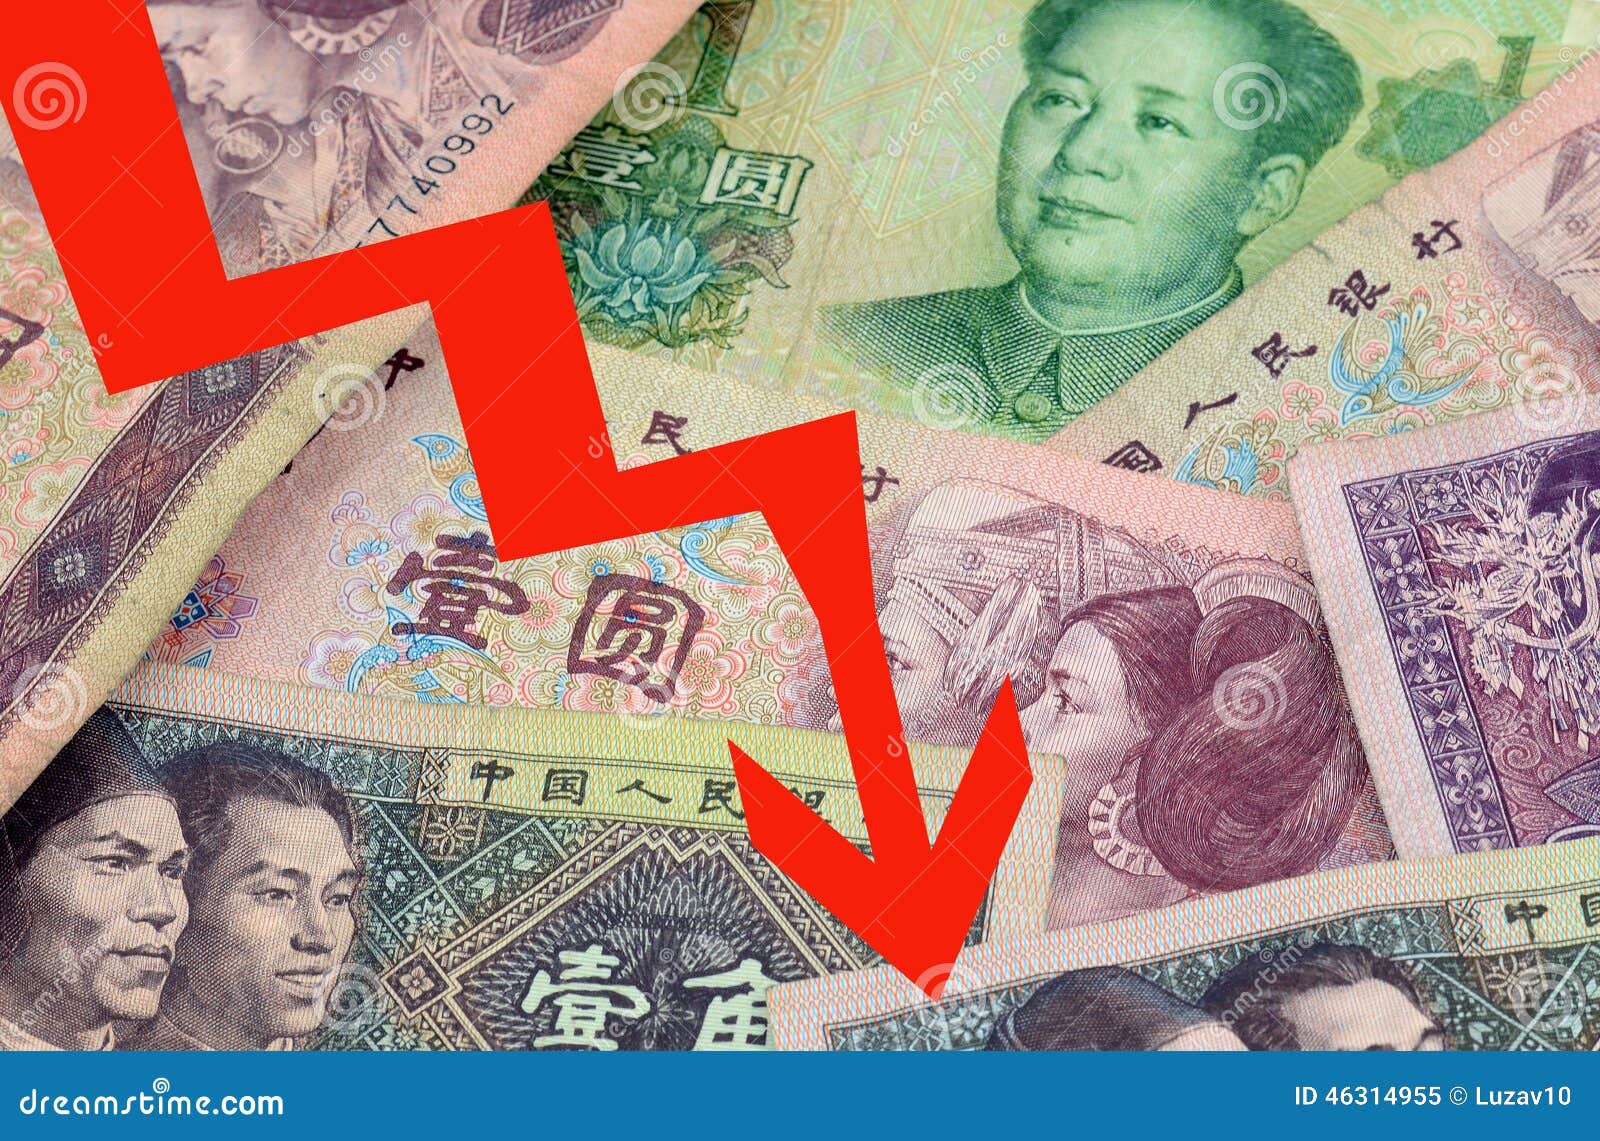 yuan chinese currency falling